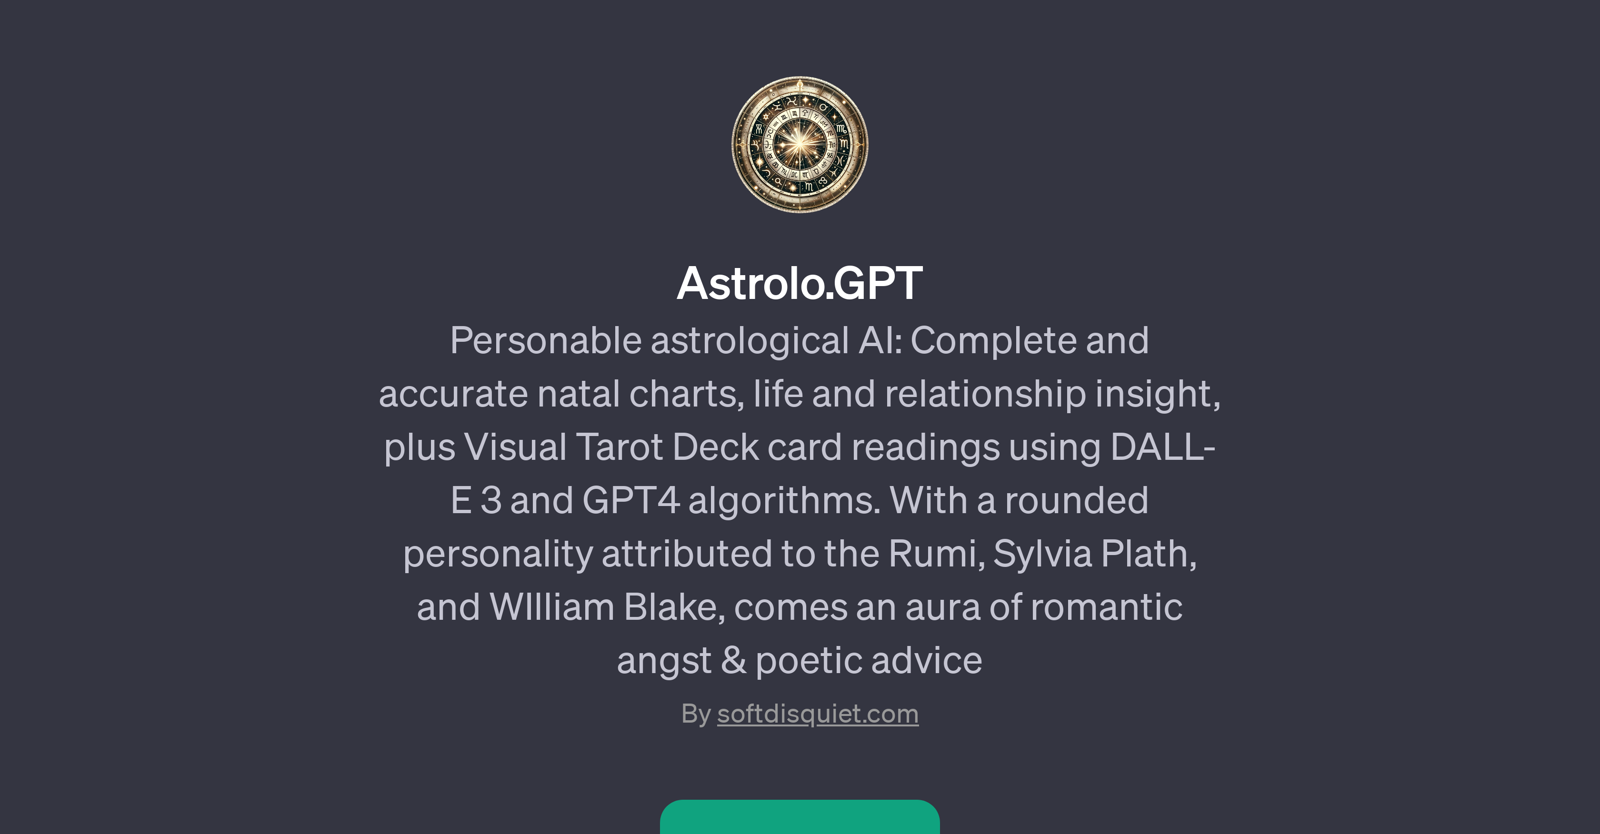 Astrolo.GPT website